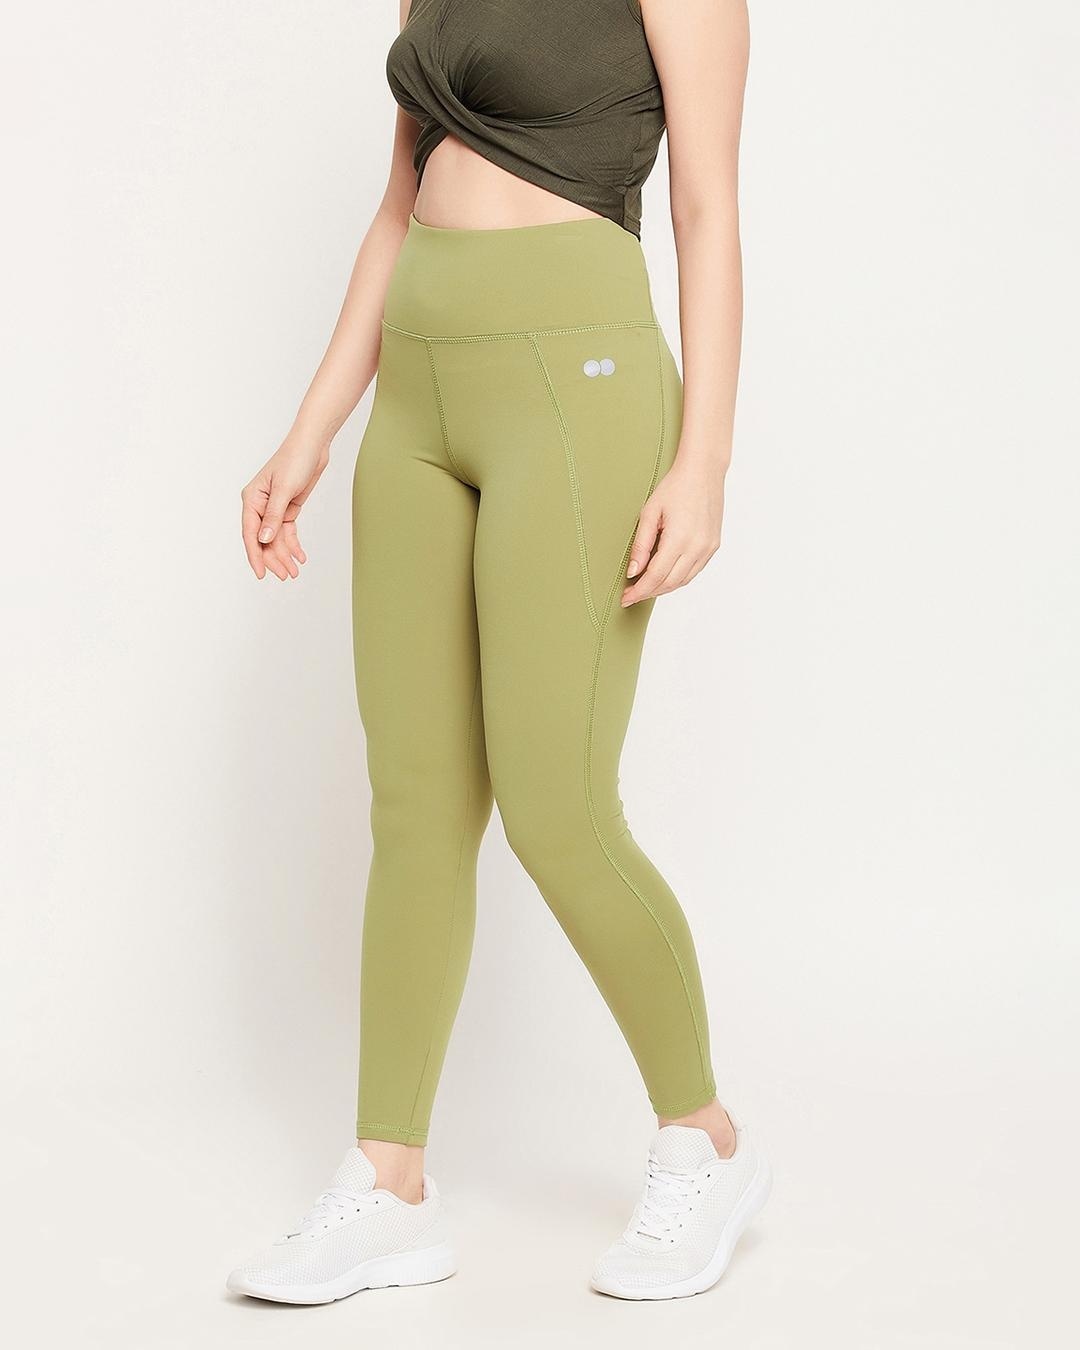 Shop Women's Green Slim Fit Tights-Back